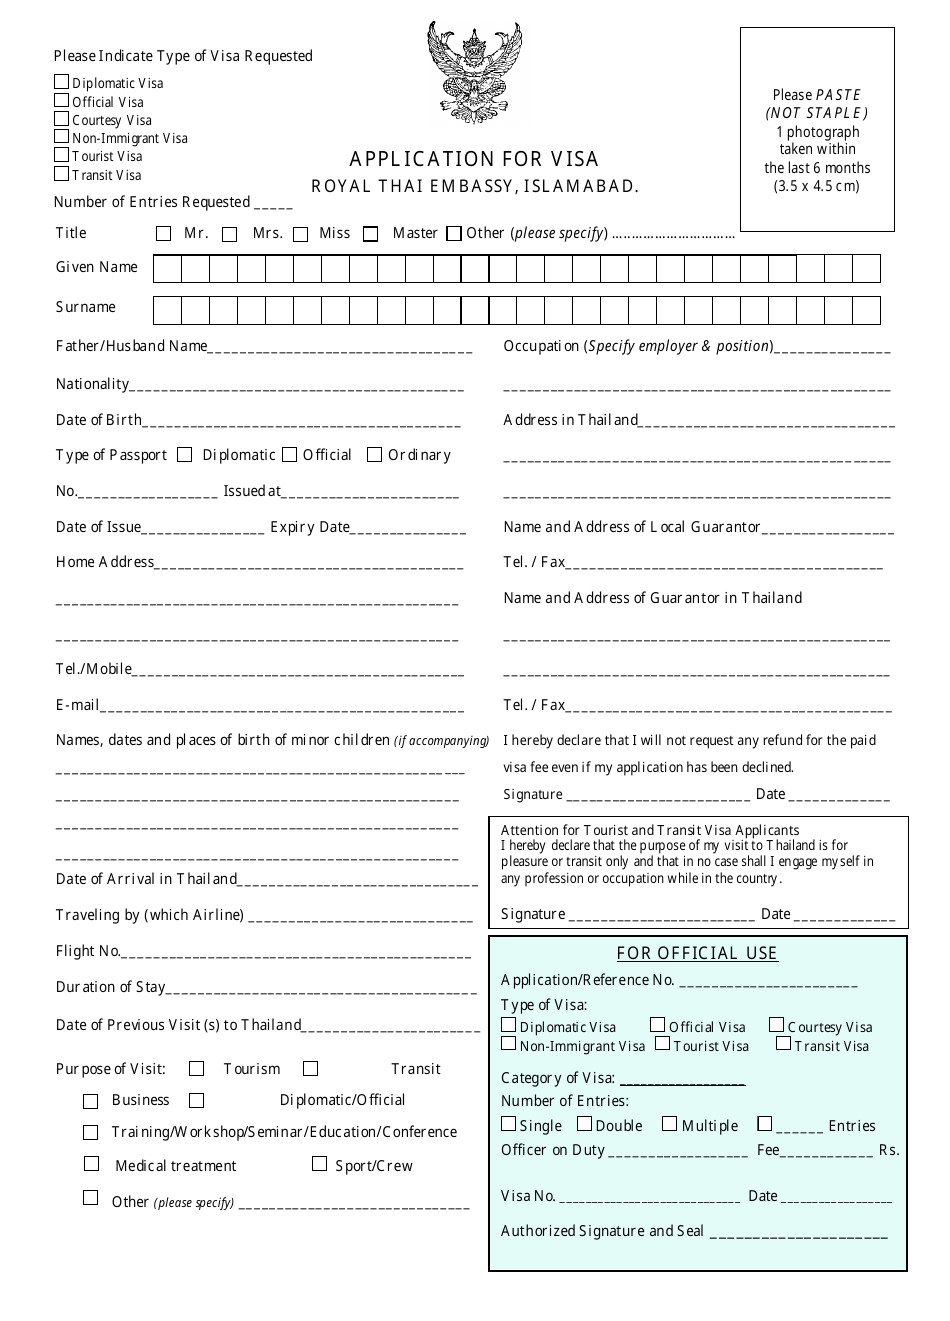 Thai Visa Application Form - Royal Thai Embassy - Islamabad, Islamabad, Pakistan, Page 1